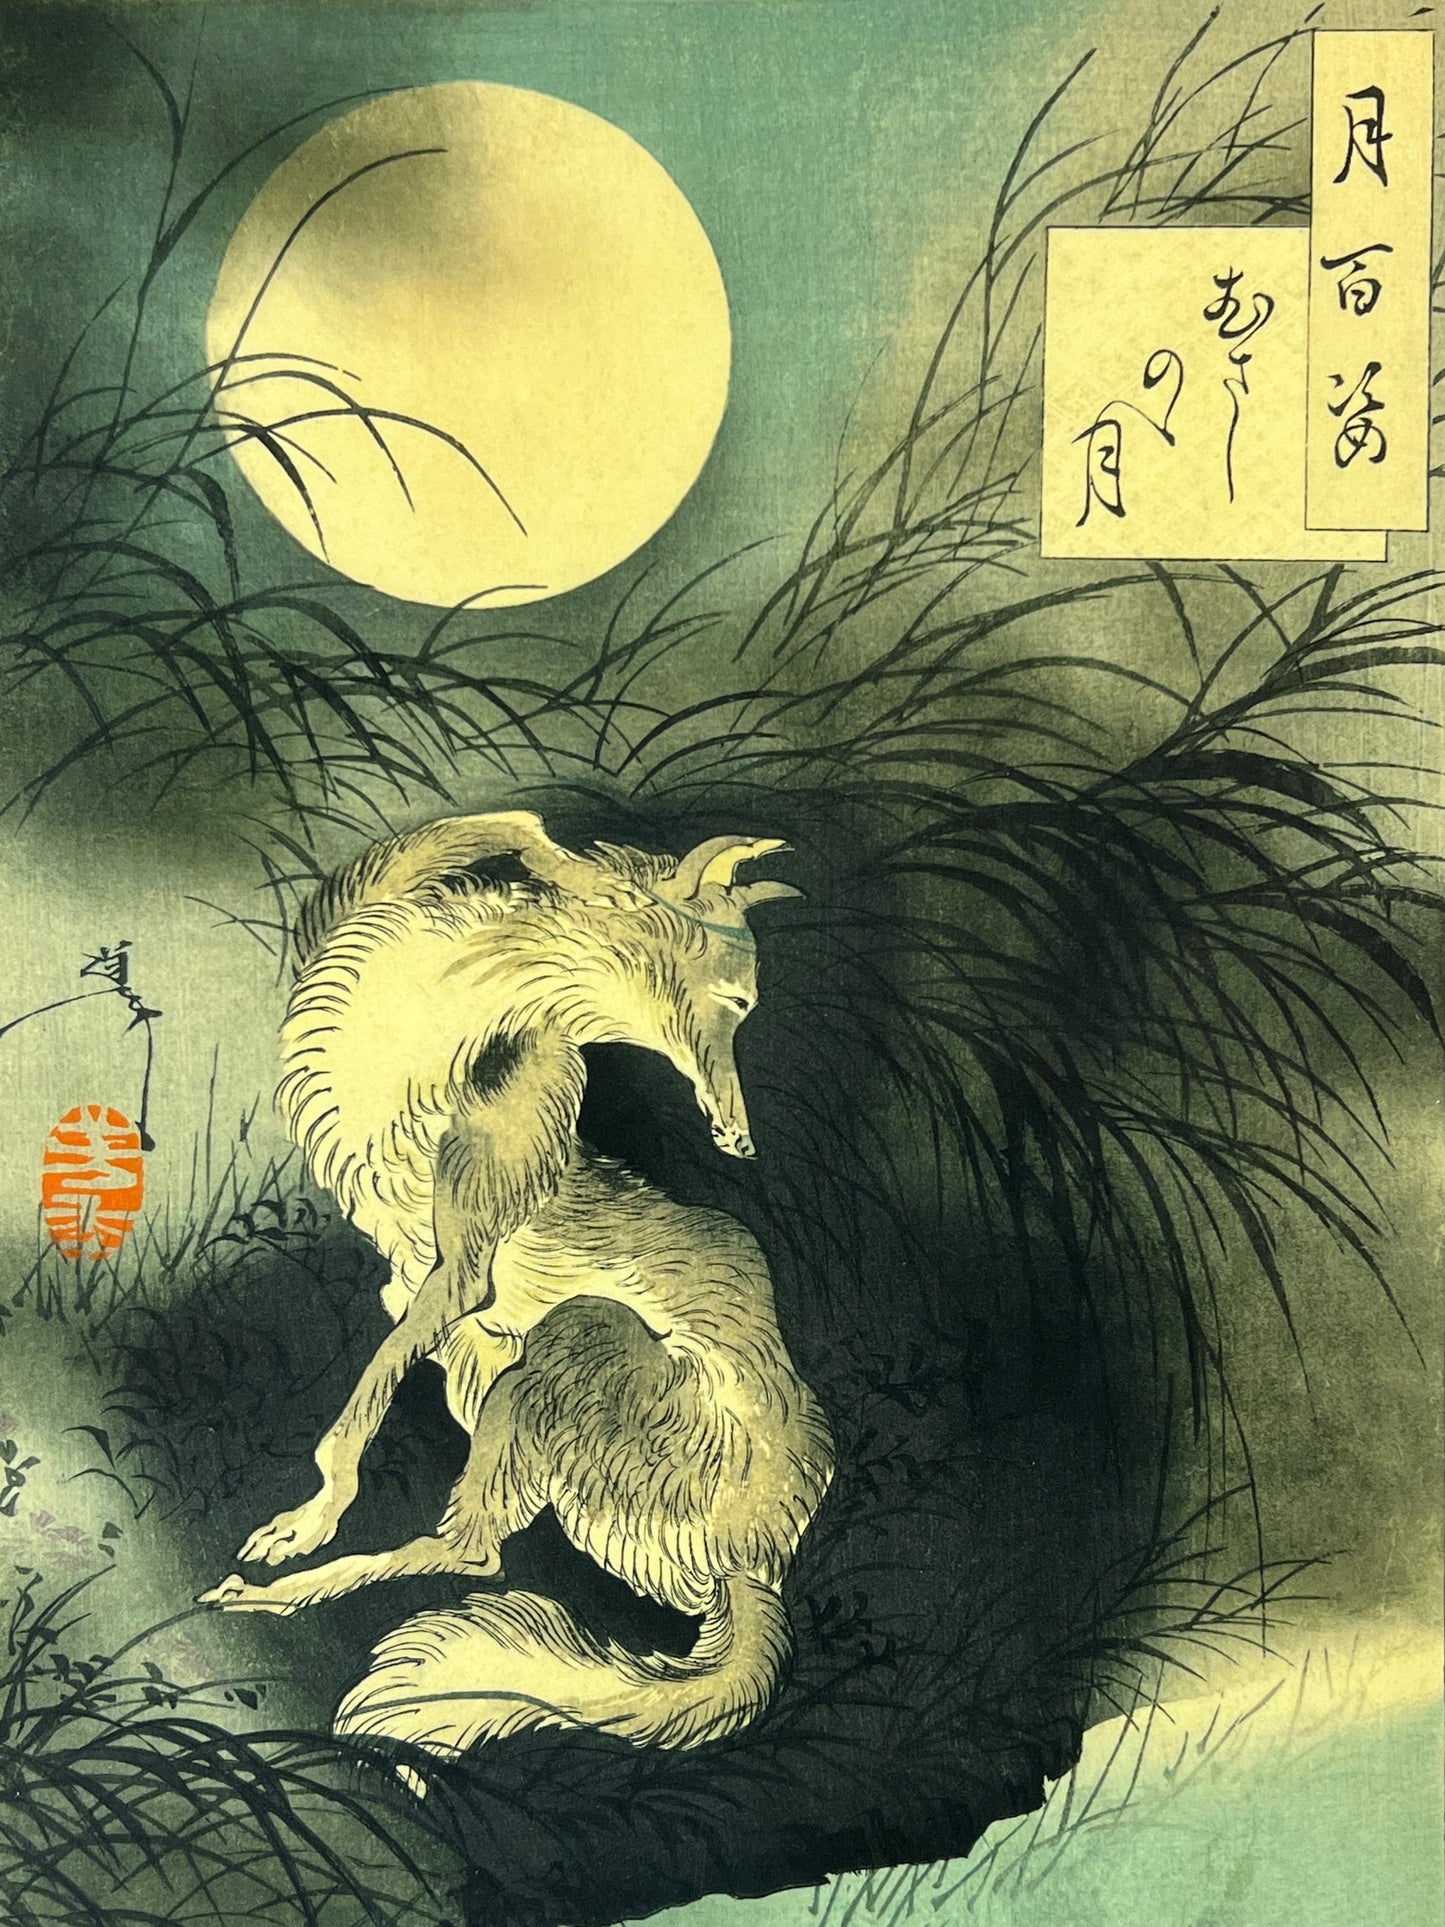 Yoshitoshi Giclee Woodblock Print "Musashi Plain Moon" 100 Views of the Moon 9.5"x14"